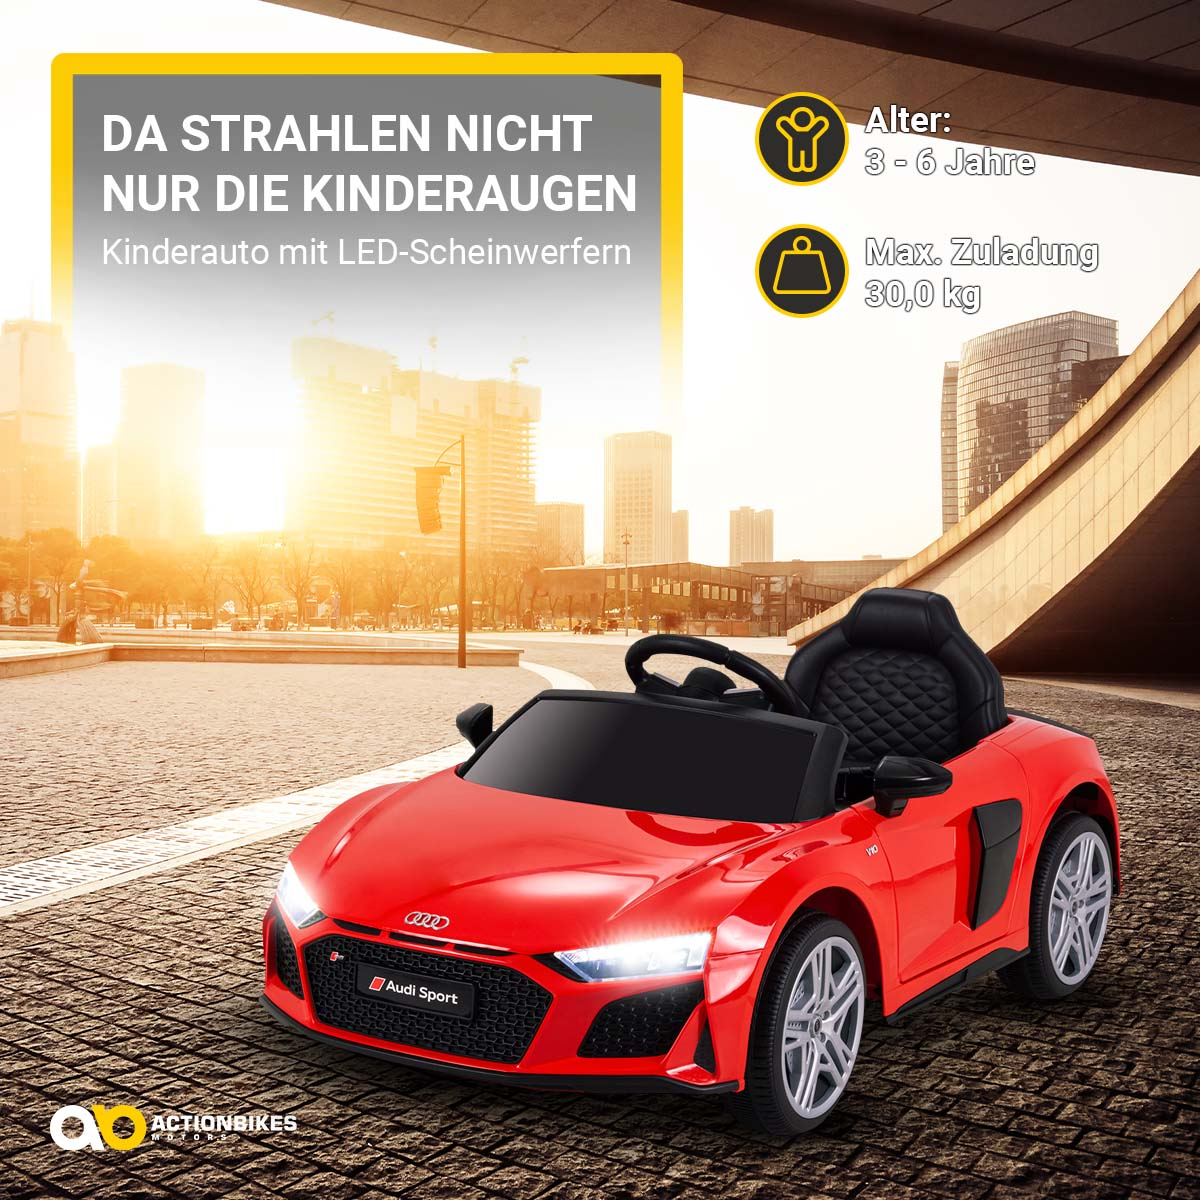 Spyder Elektroauto ACTIONBIKES R8 4S MOTORS Audi Lizenziert